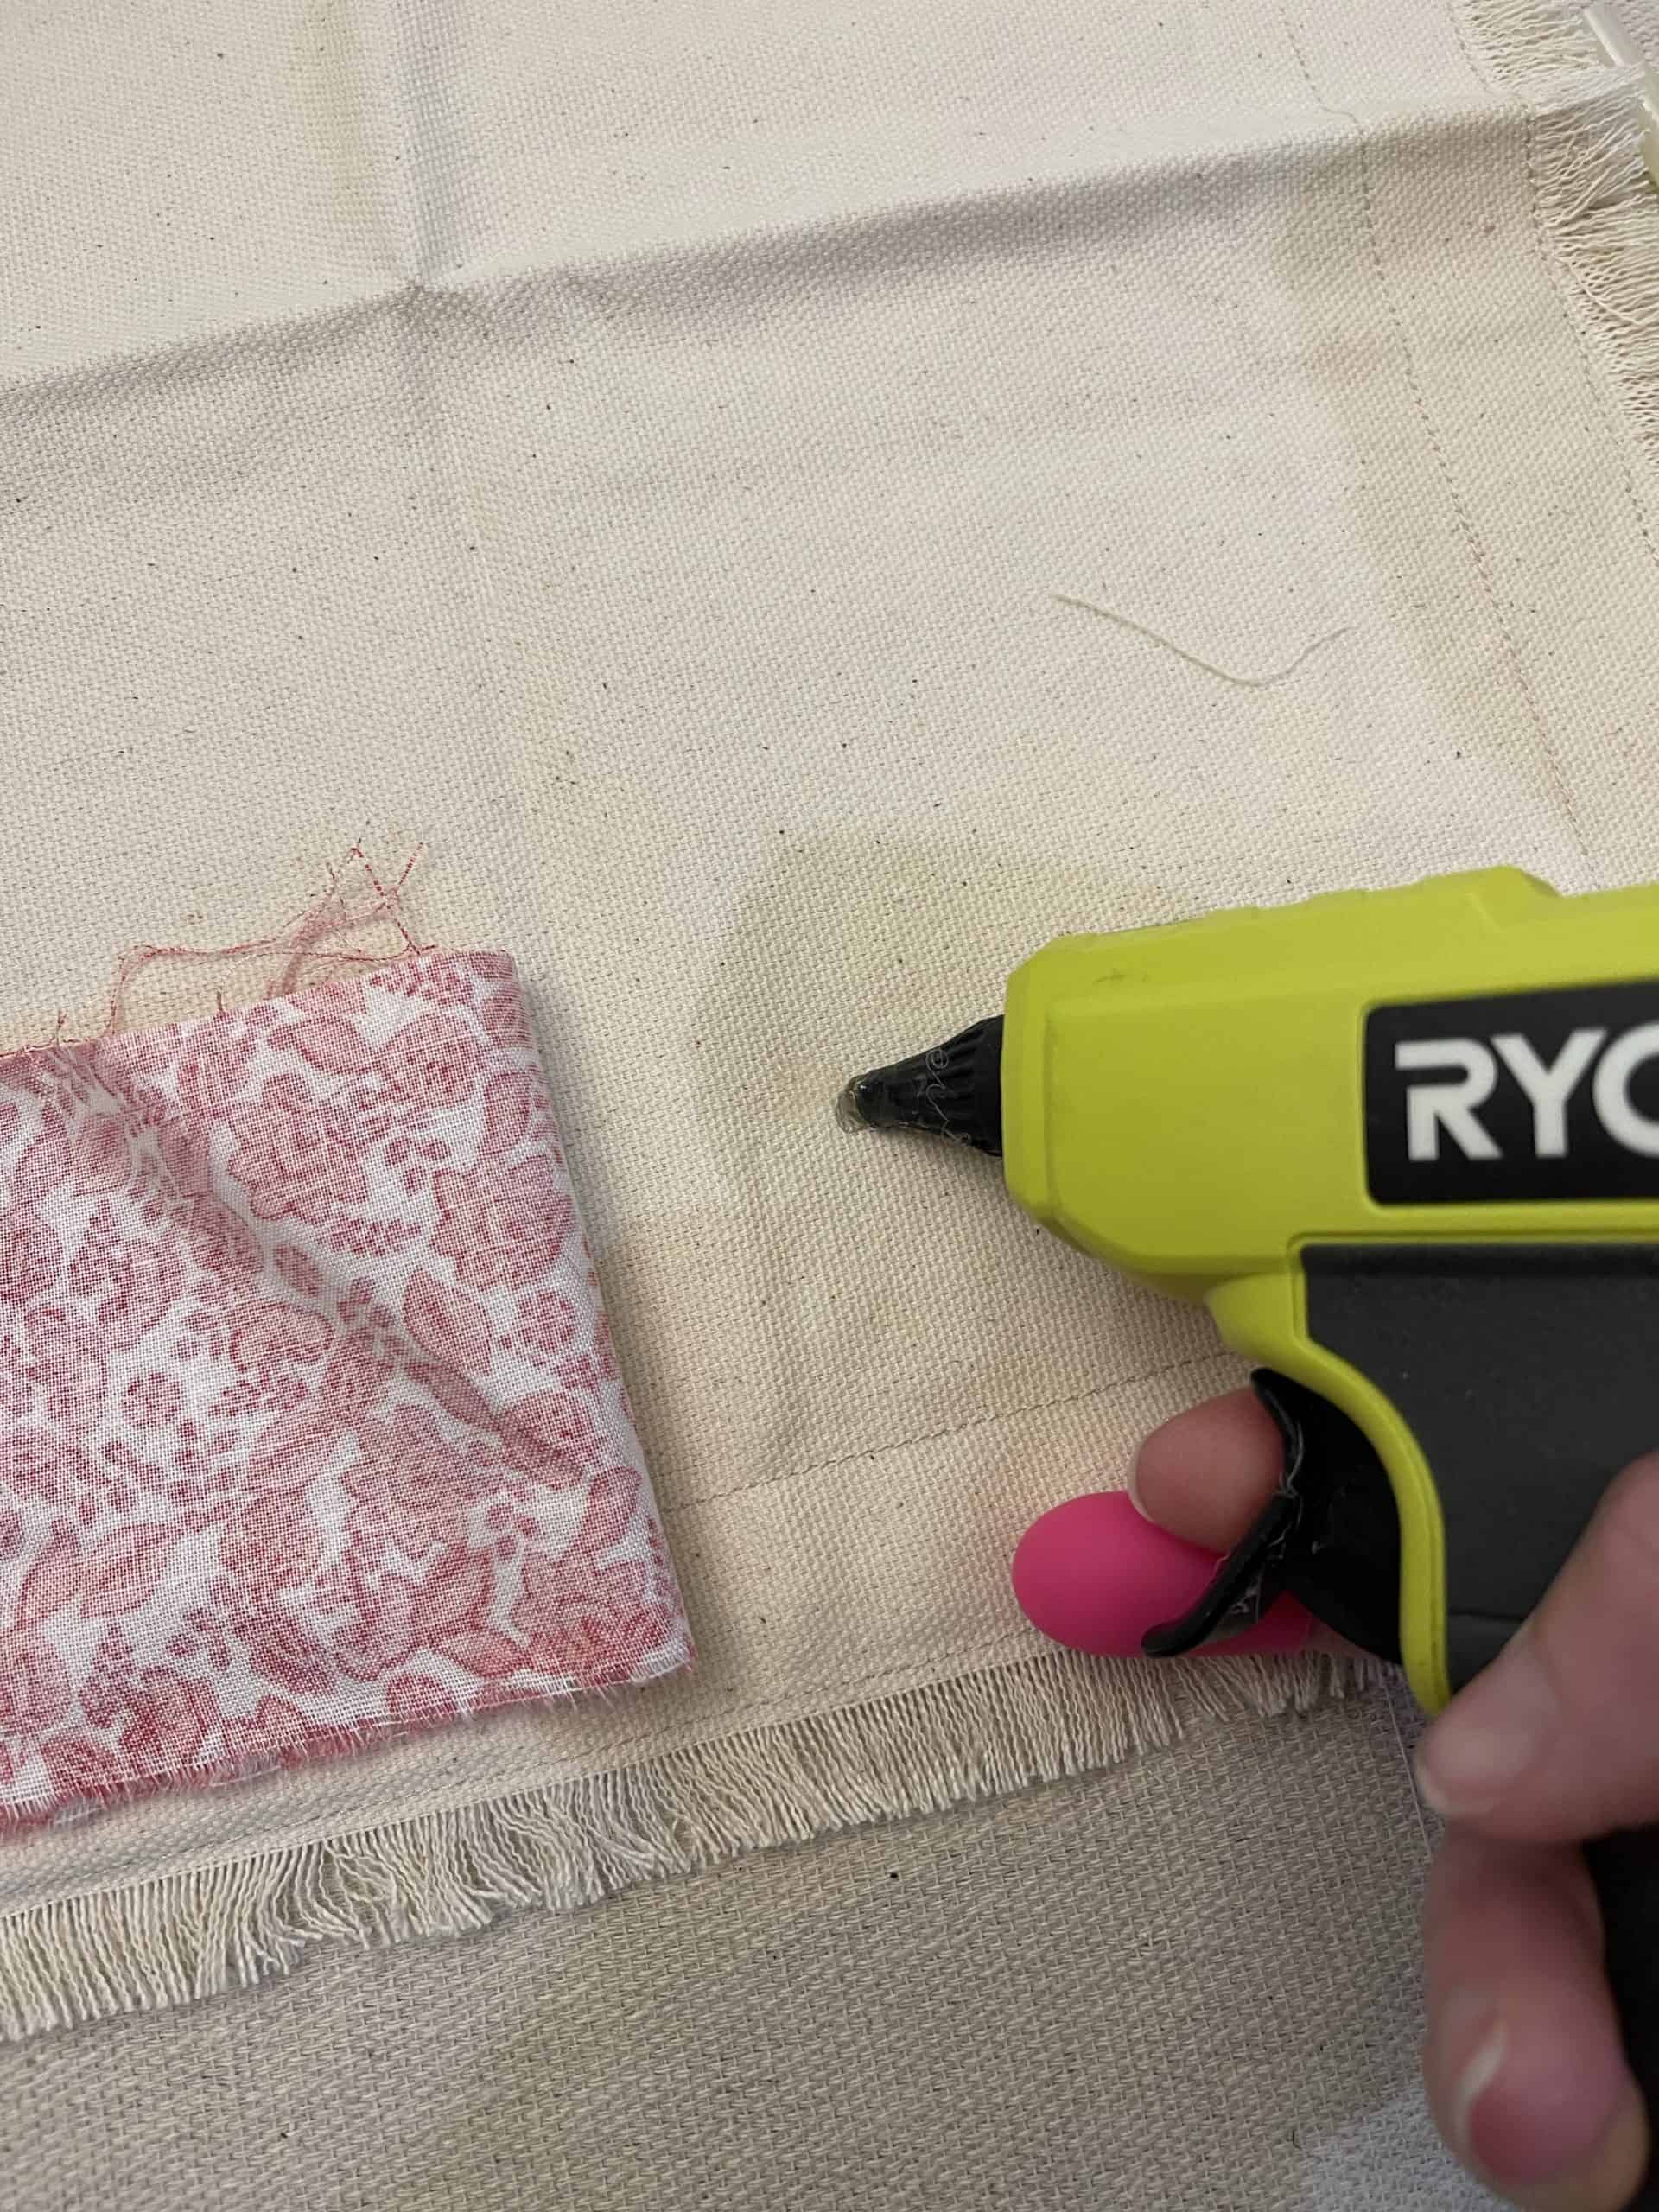 surebonder fabric hot glue sticks gluing fabric